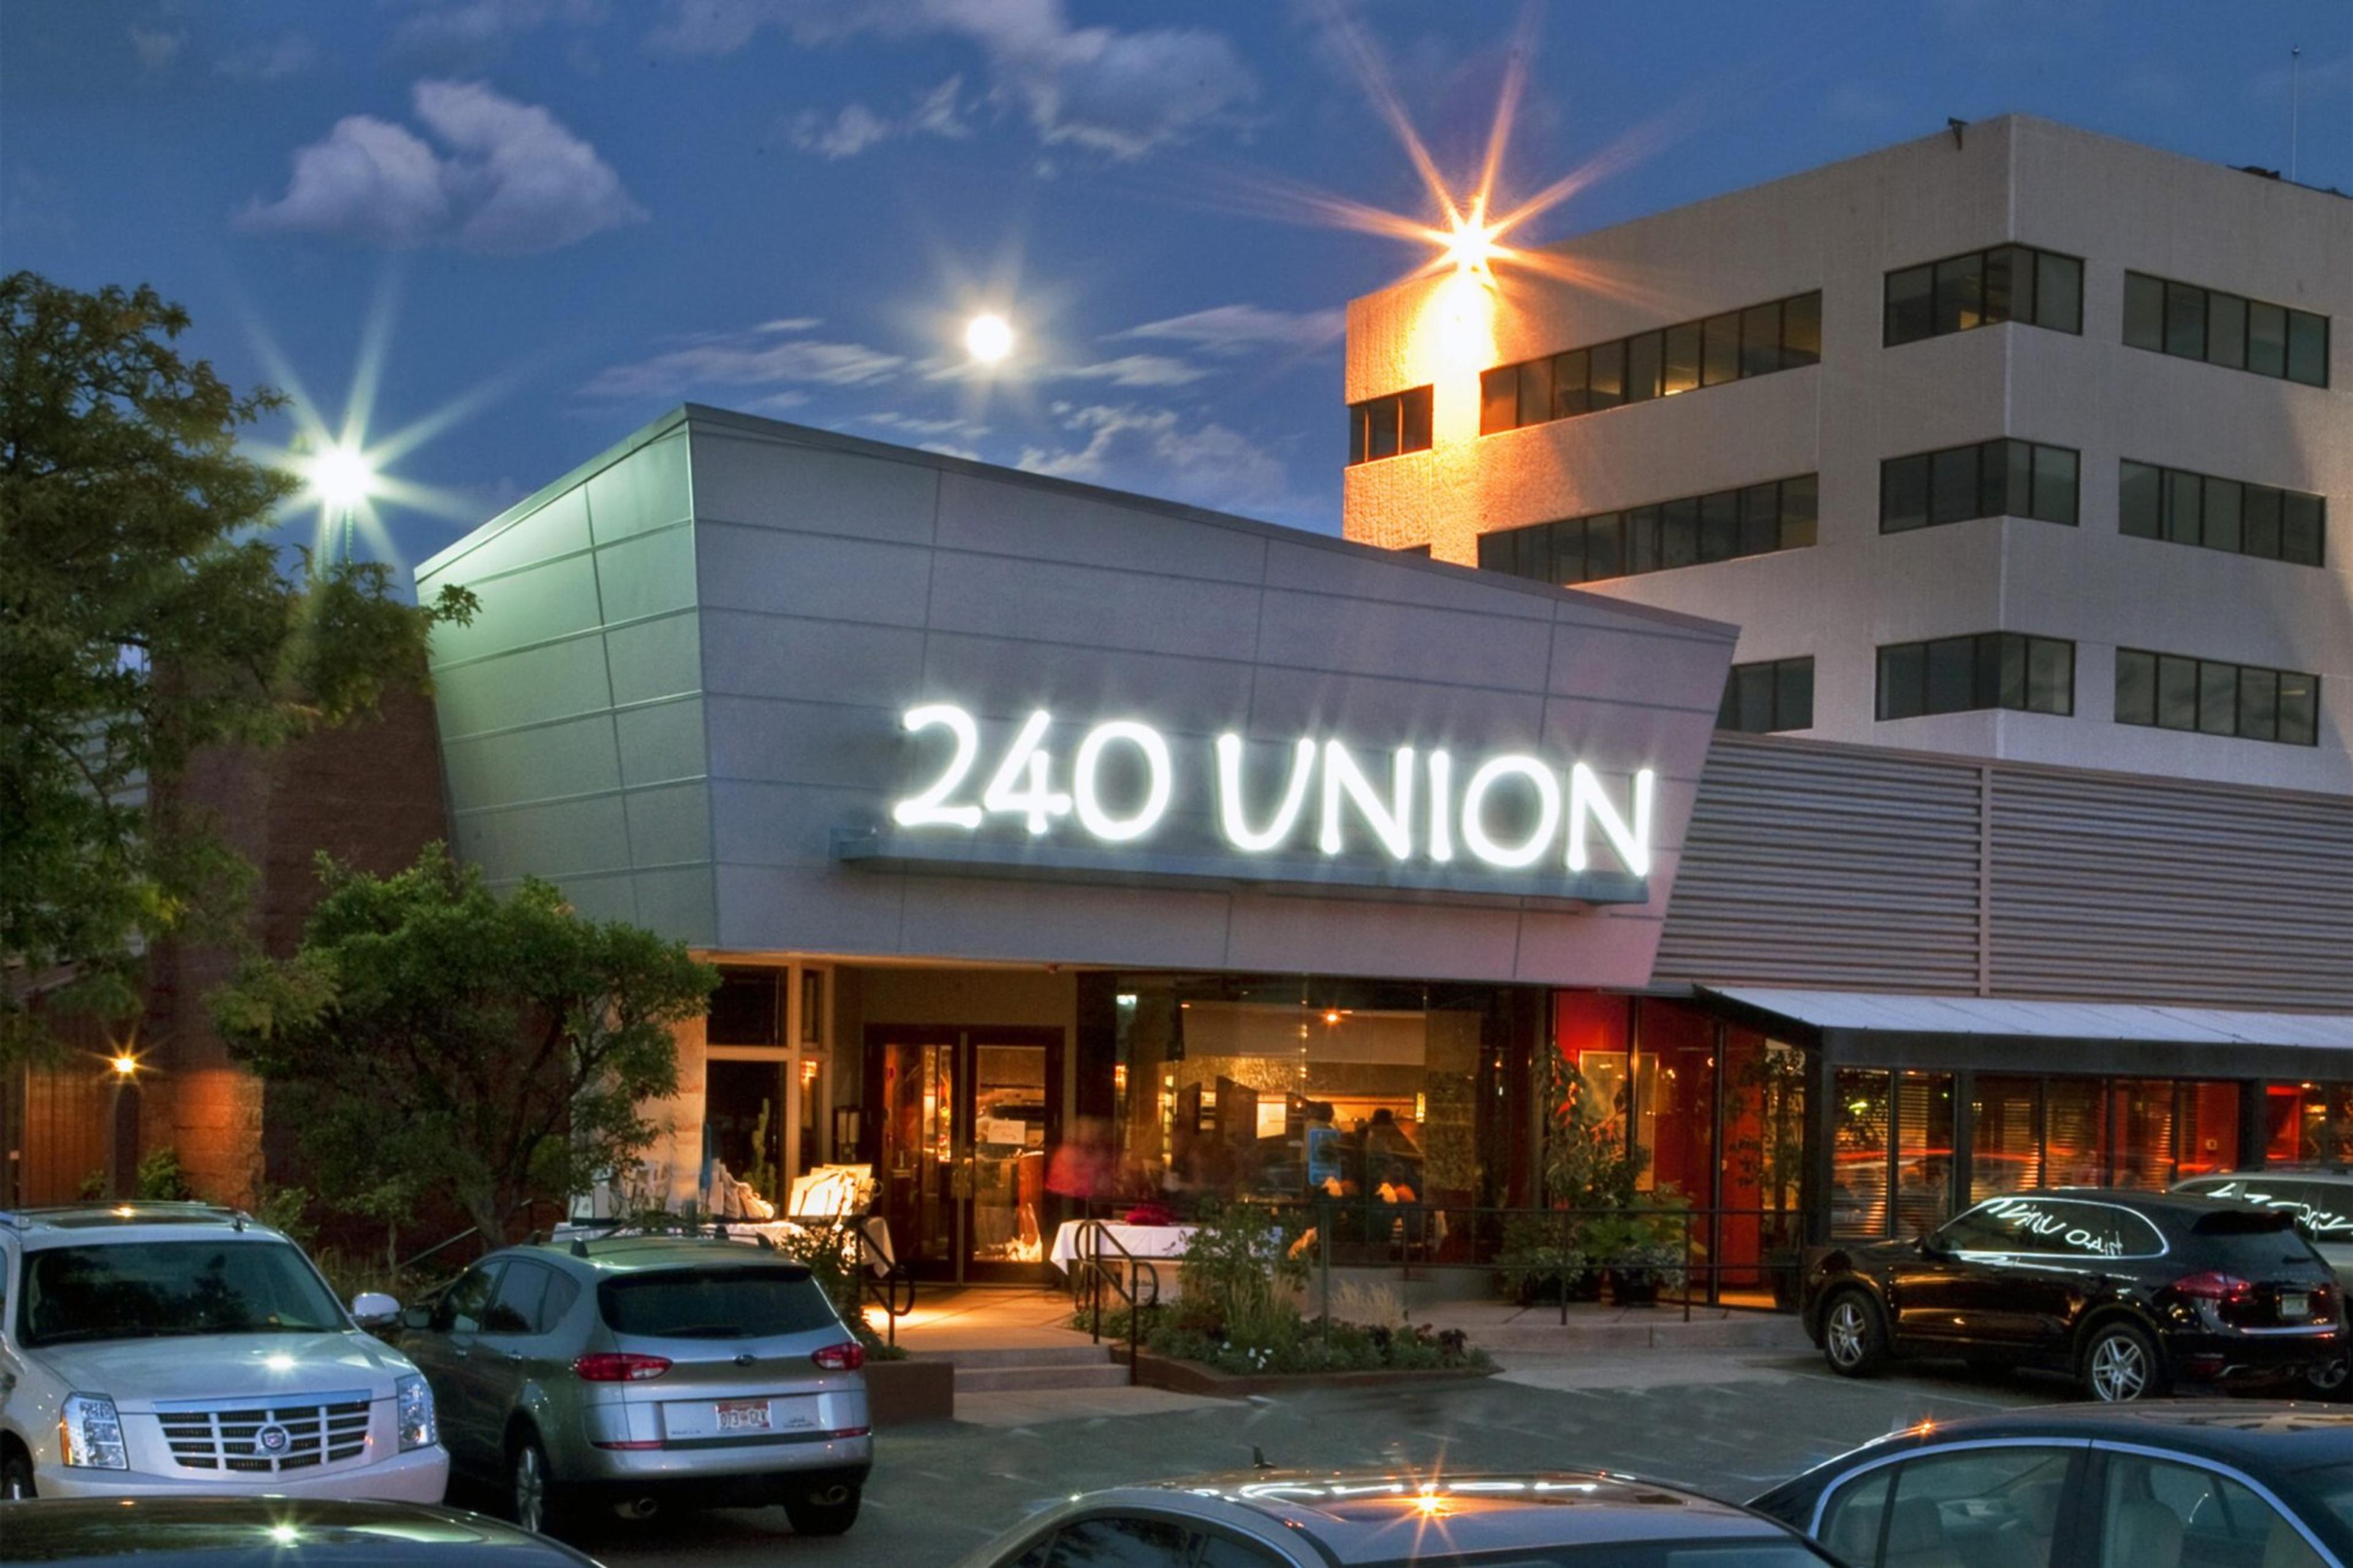 240 Union Restaurant